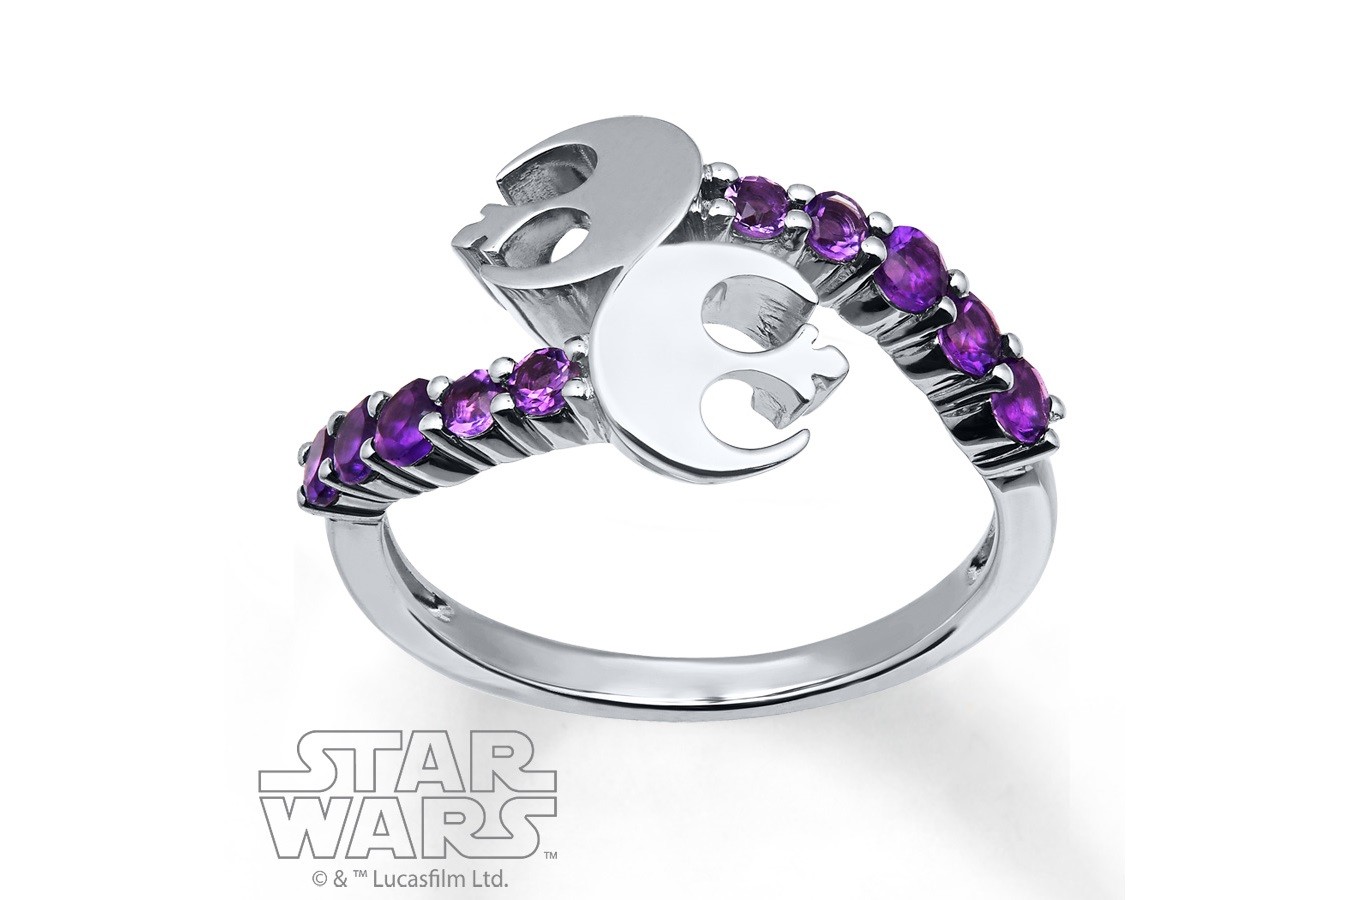 New Kay Jewelers x Star Wars rings